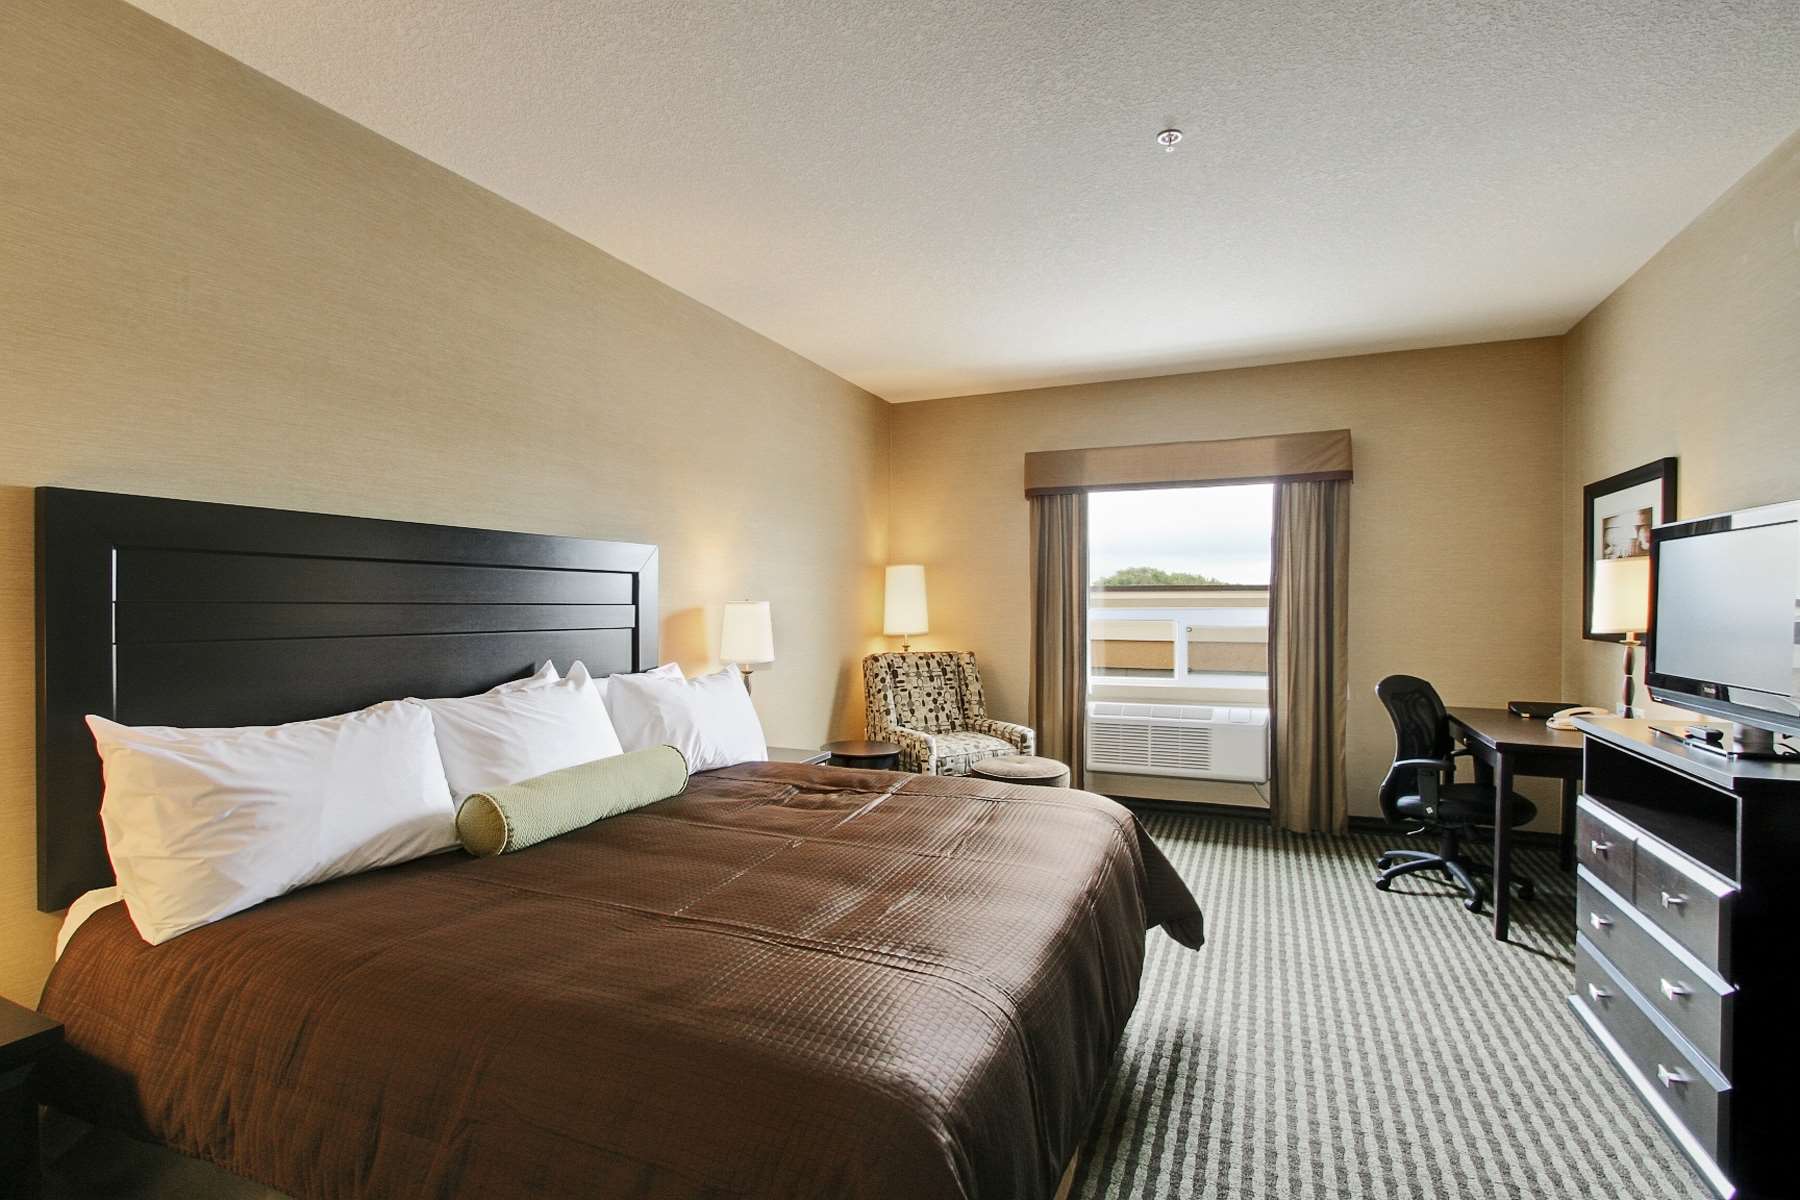 King Bed Guest Room Best Western Sunrise Inn & Suites Stony Plain (780)968-1716